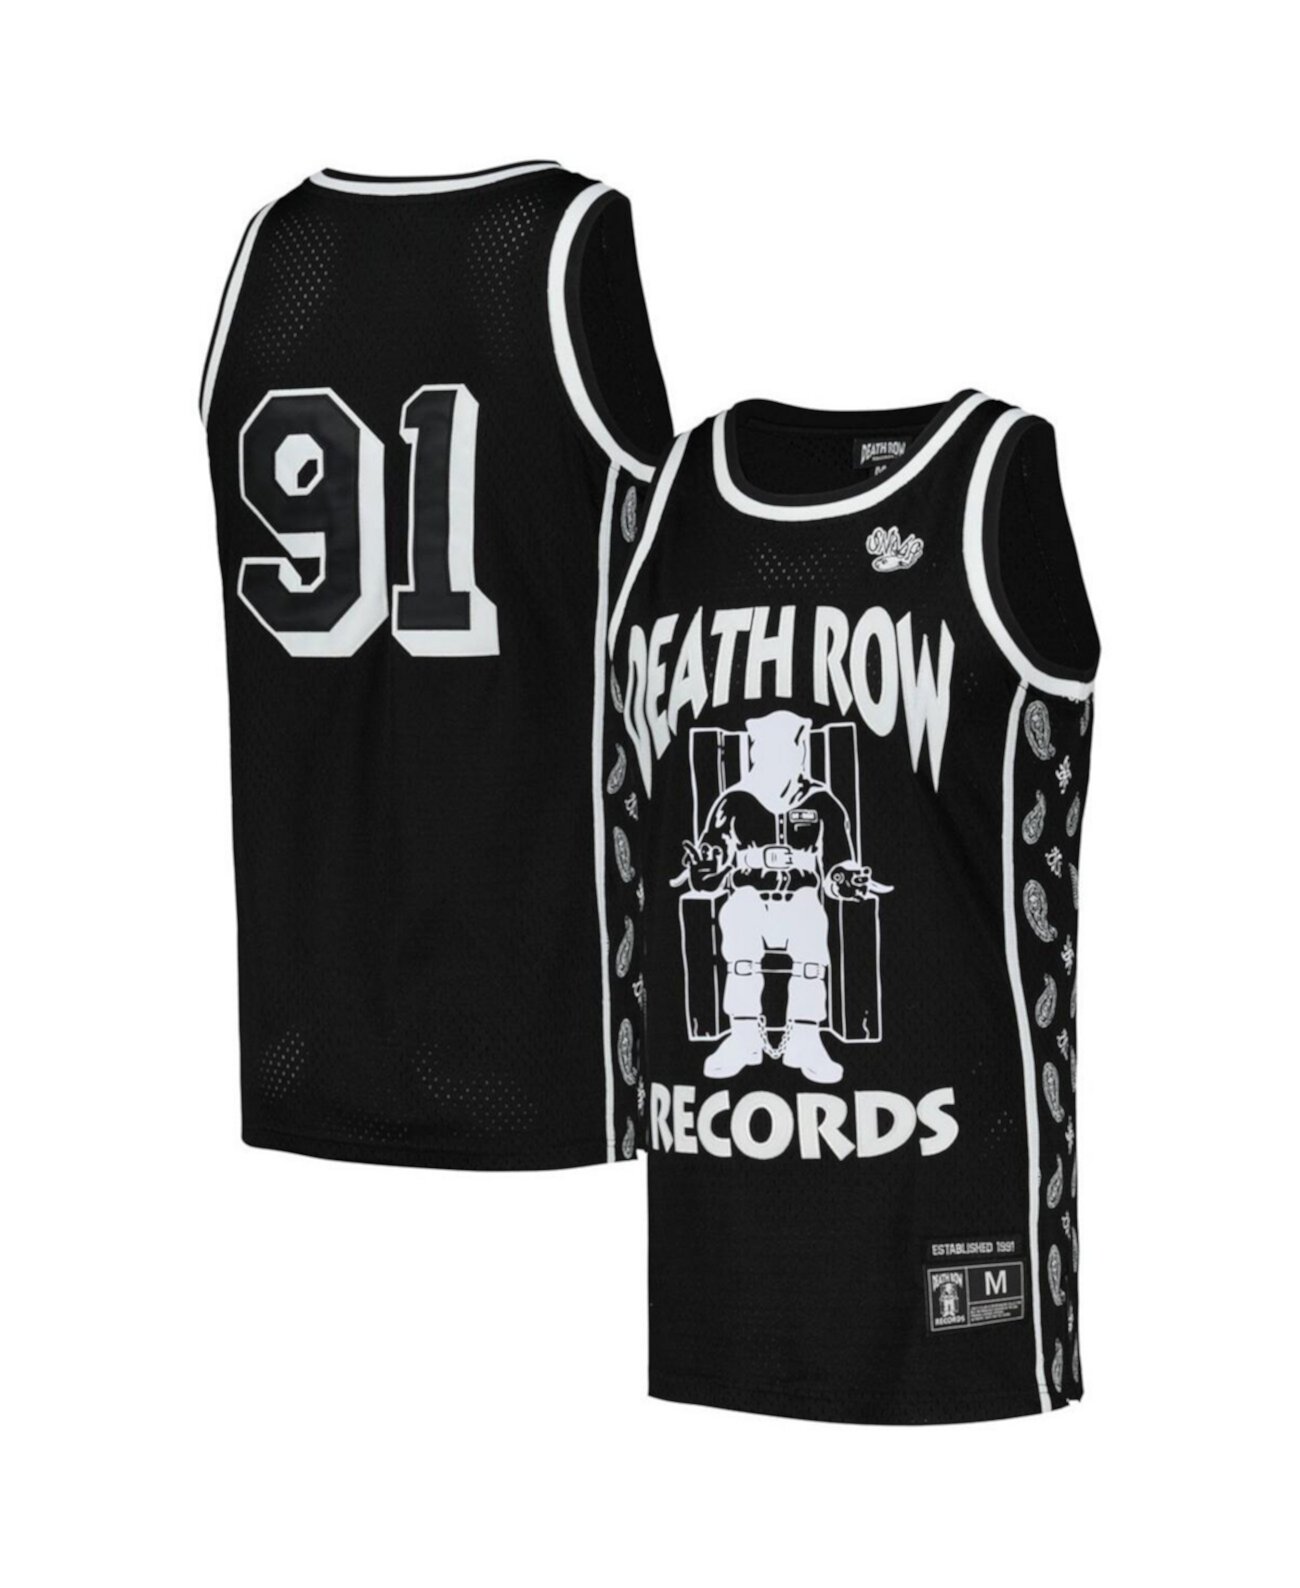 Men's Black Death Row Records Basketball Jersey Lids